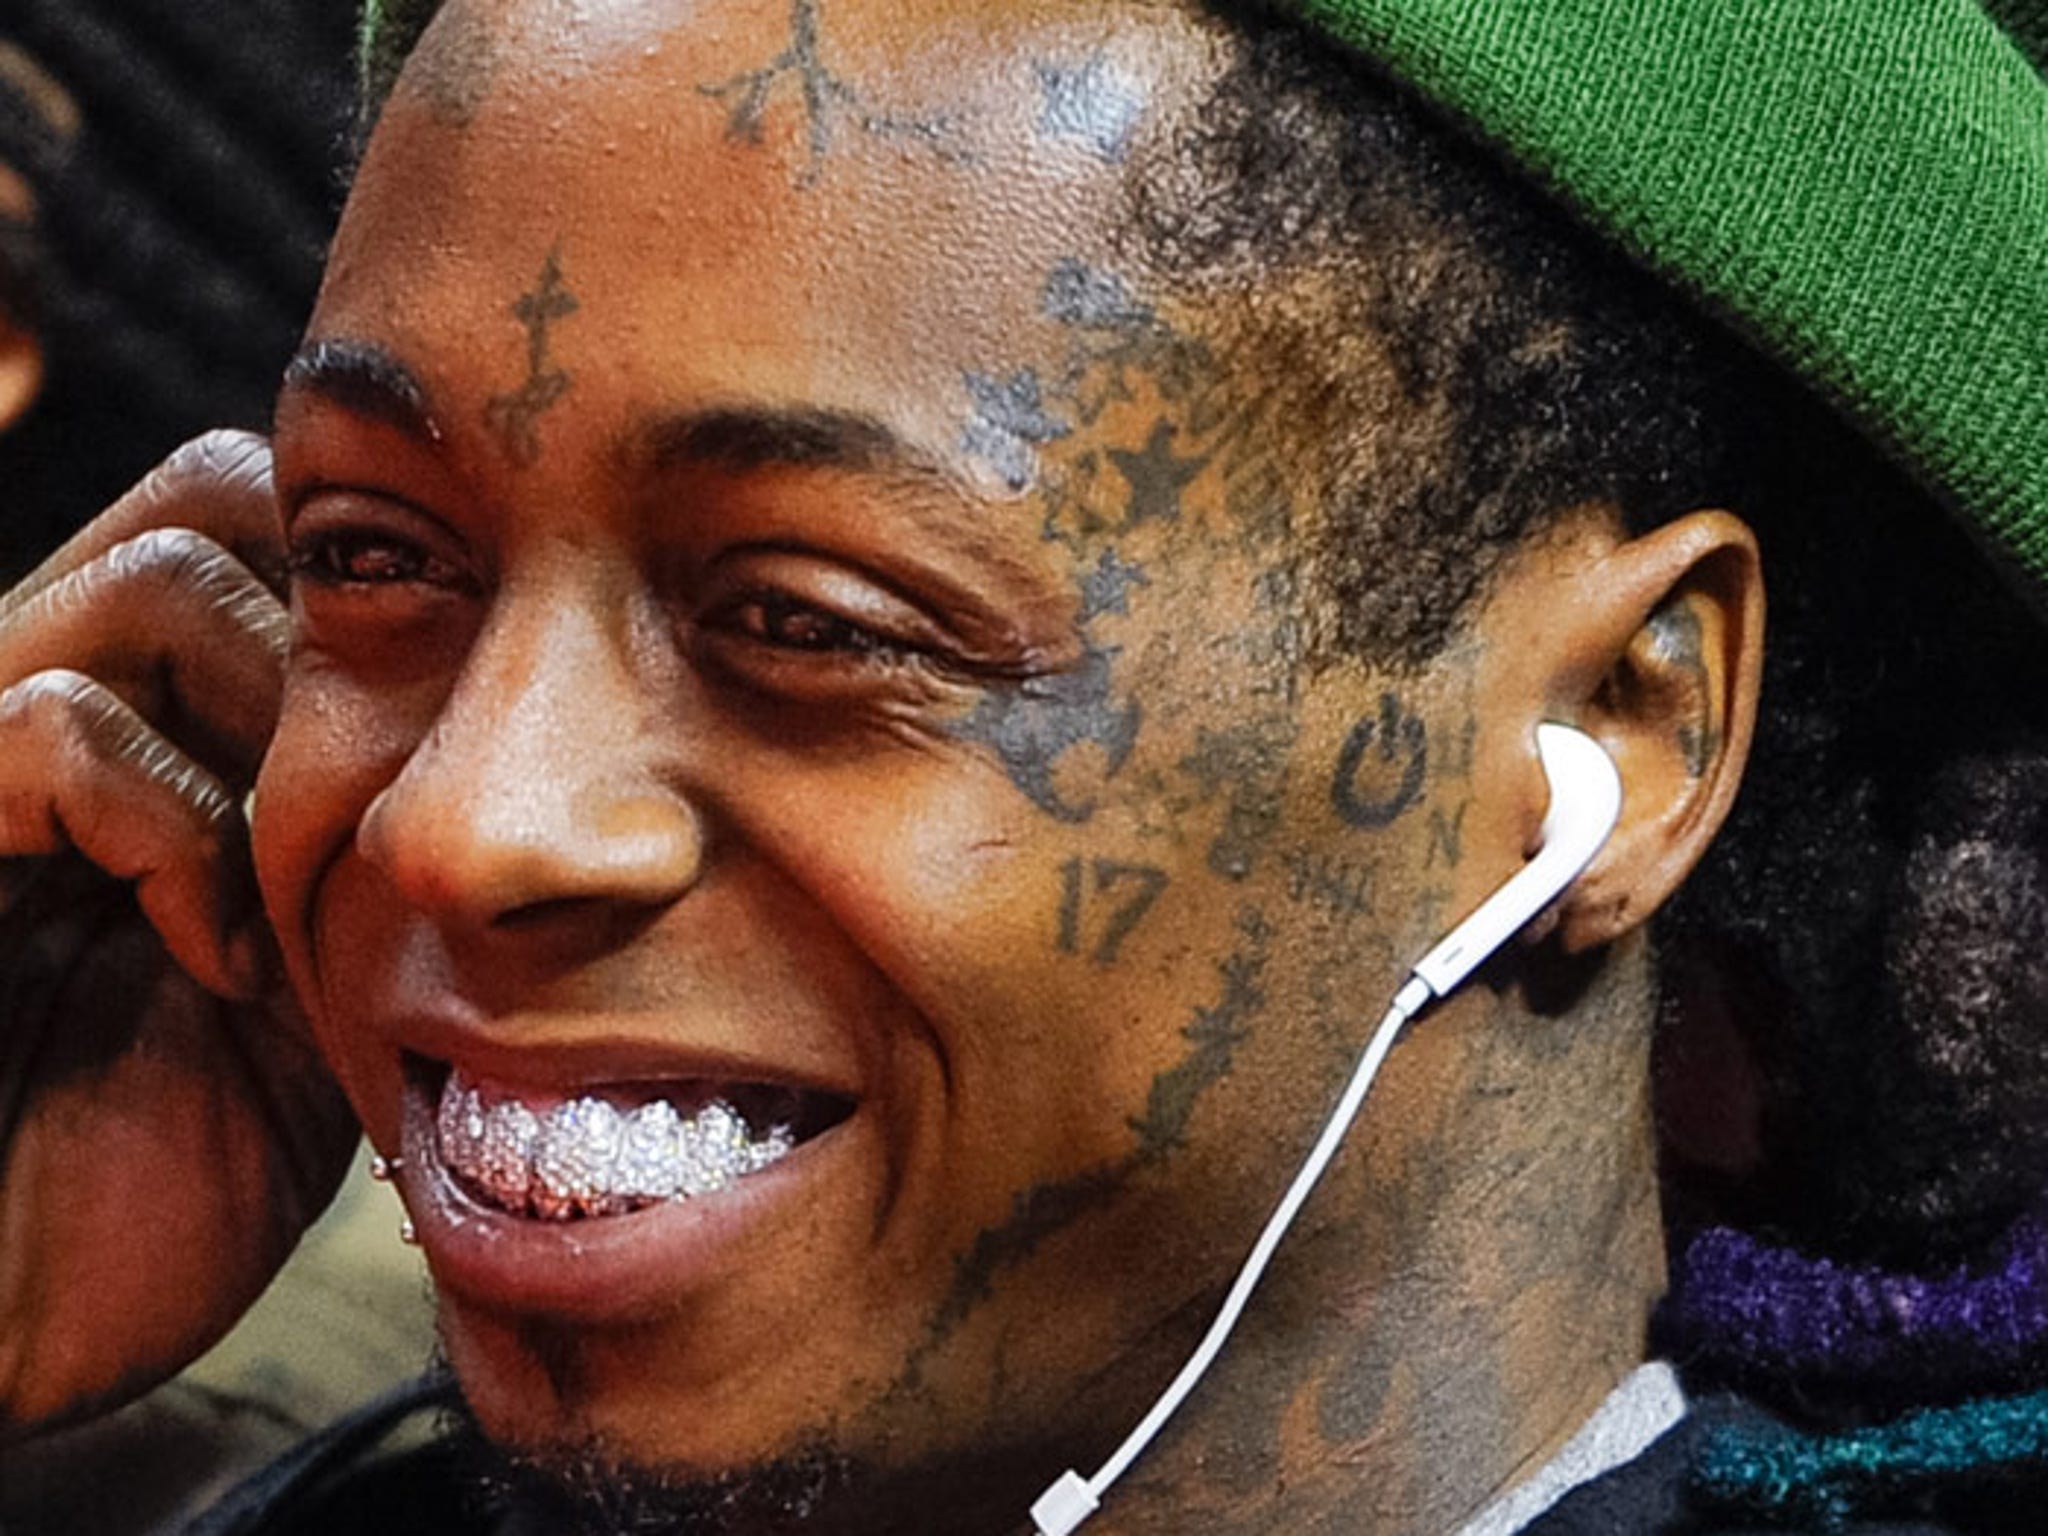 Lil Wayne HQ on Twitter Lil Wayne Hosts A Halloween Party In Miami  Debuts New Face Tattoos Pictures  httpstcoRVmhi1iJbQ  httpstco0llfJNeO4z  Twitter